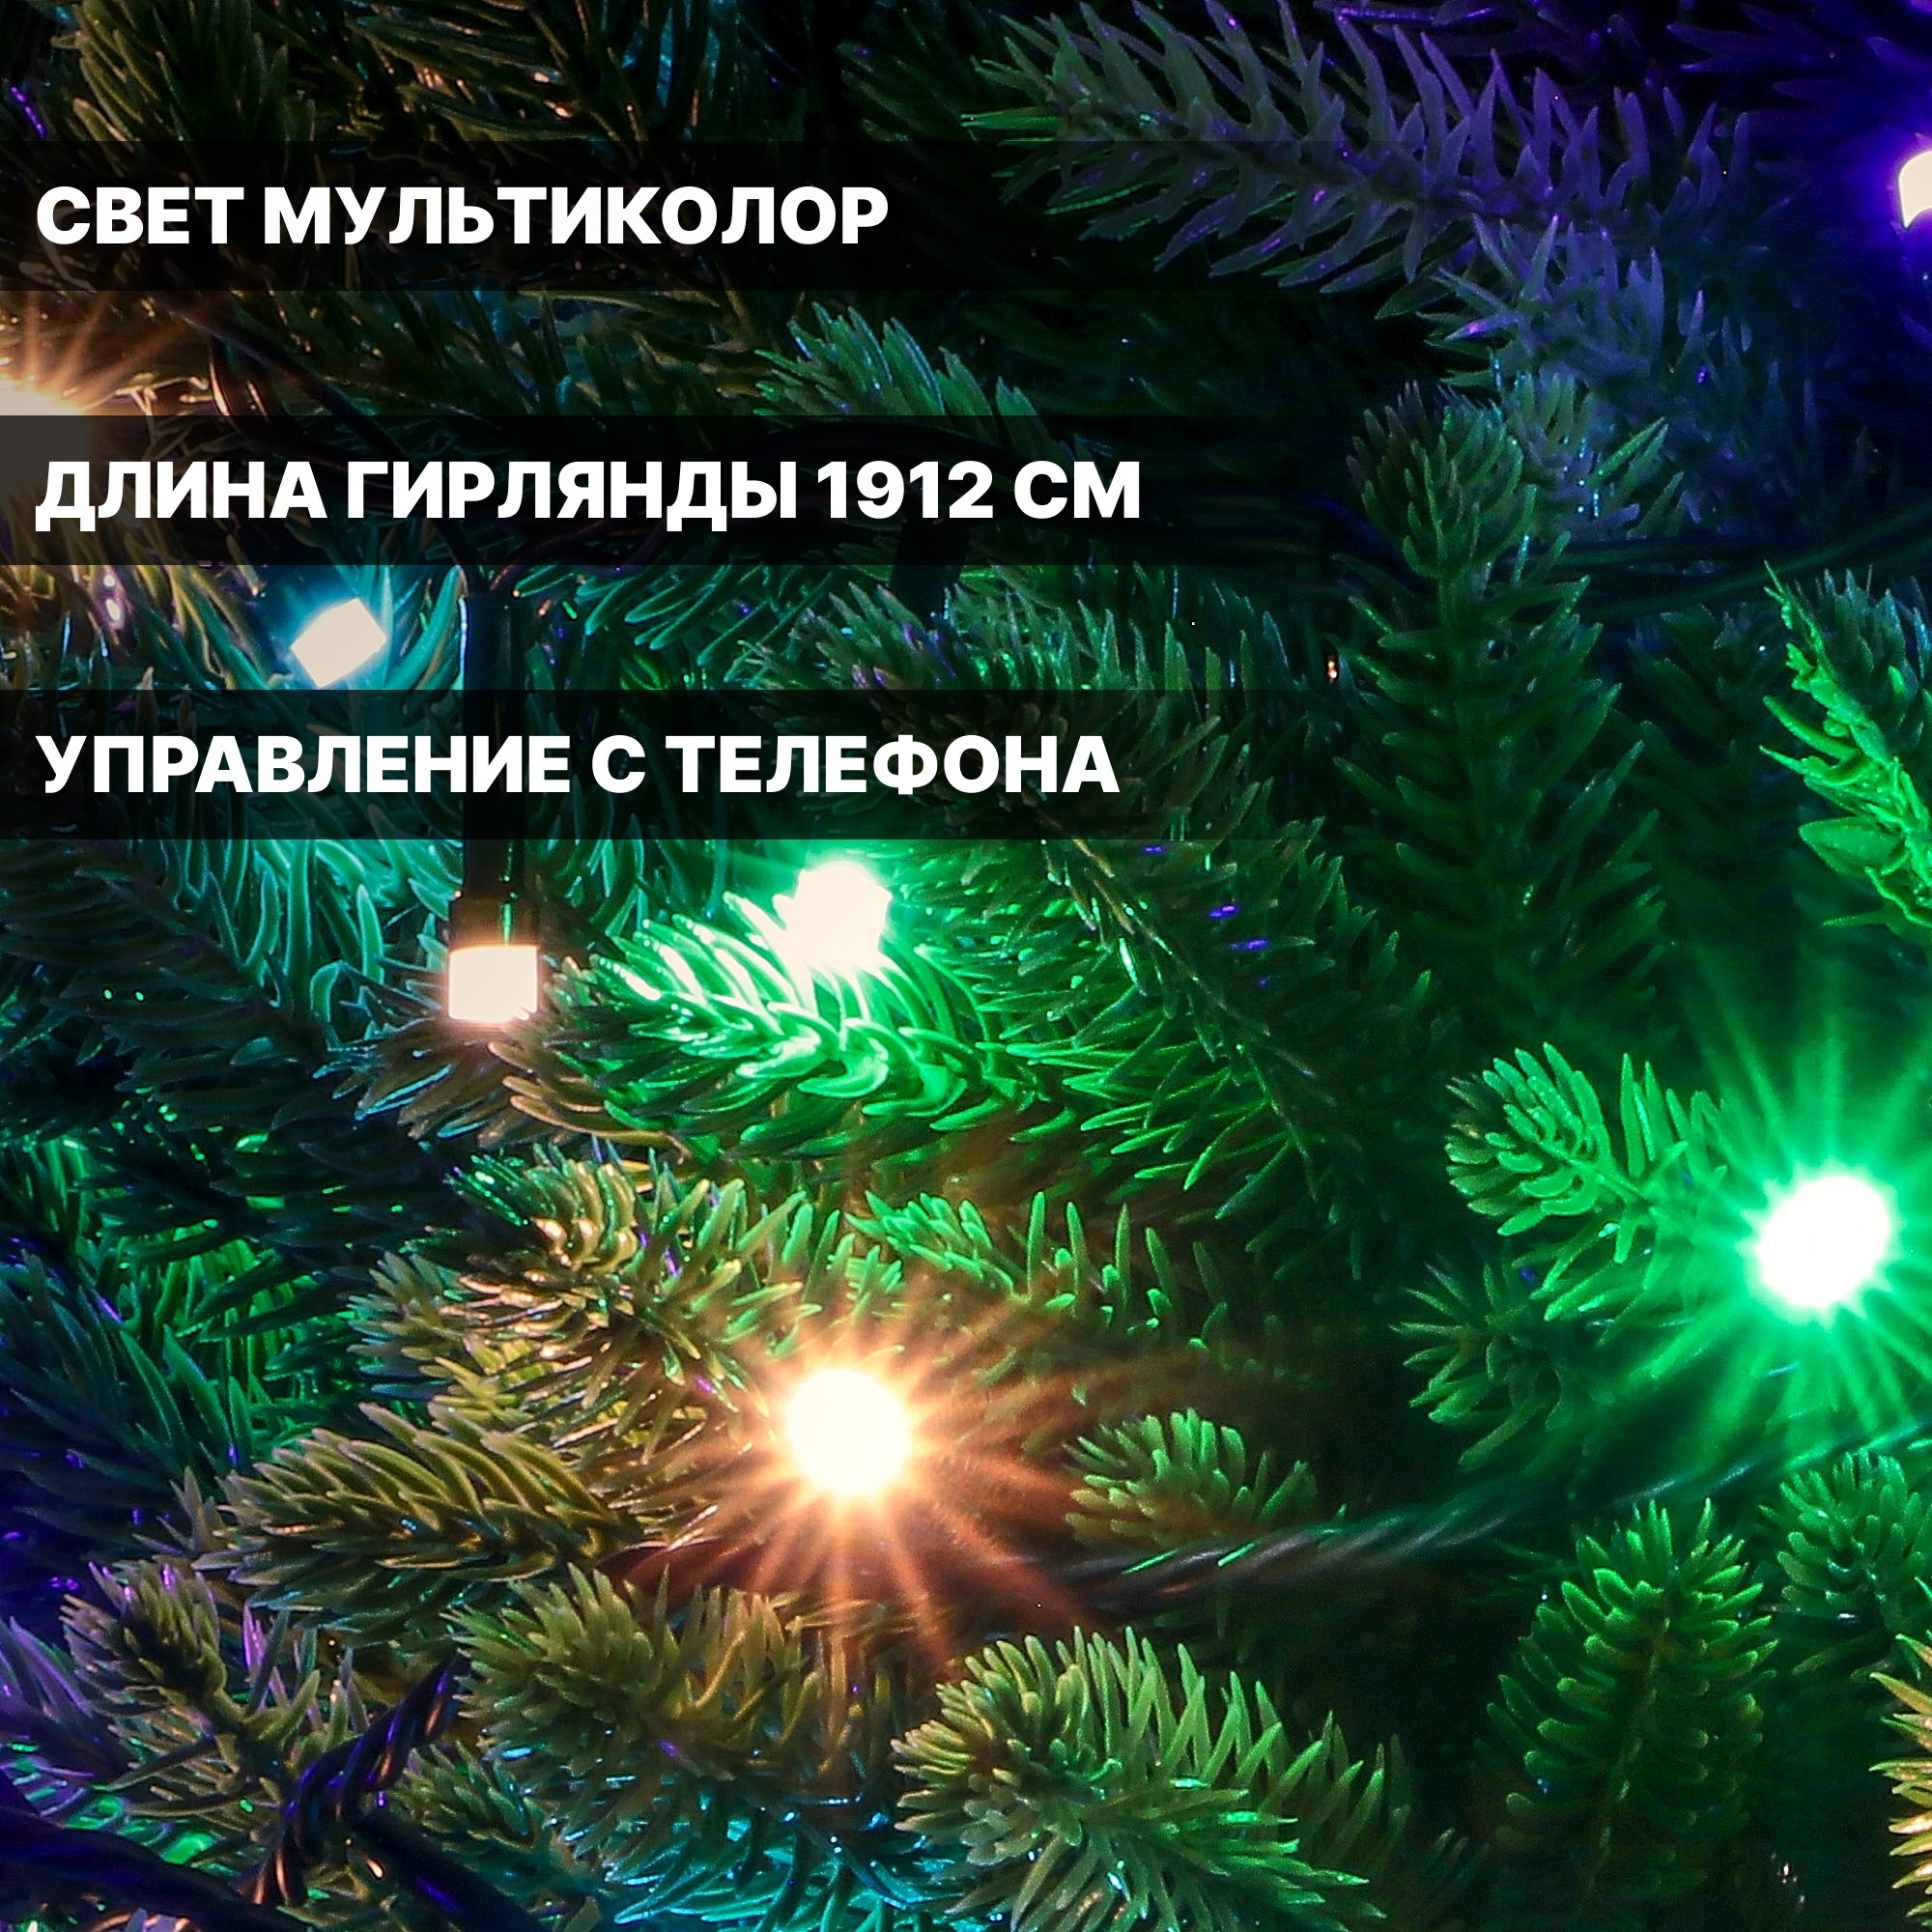 Электрогирлянда Reason 2412 см 240 LED, цвет мультиколор - фото 5